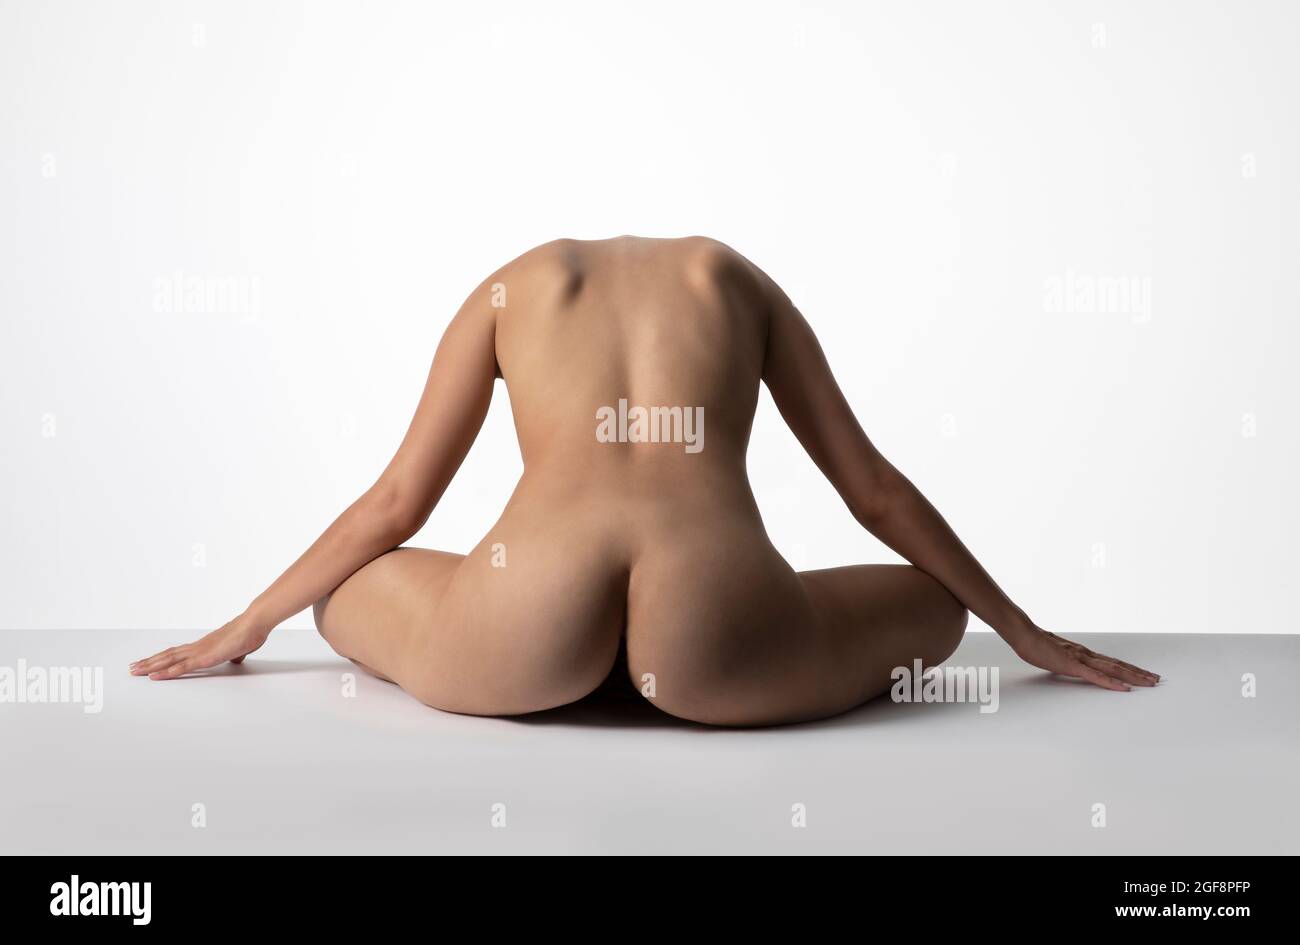 Nude female figure Stock Photo